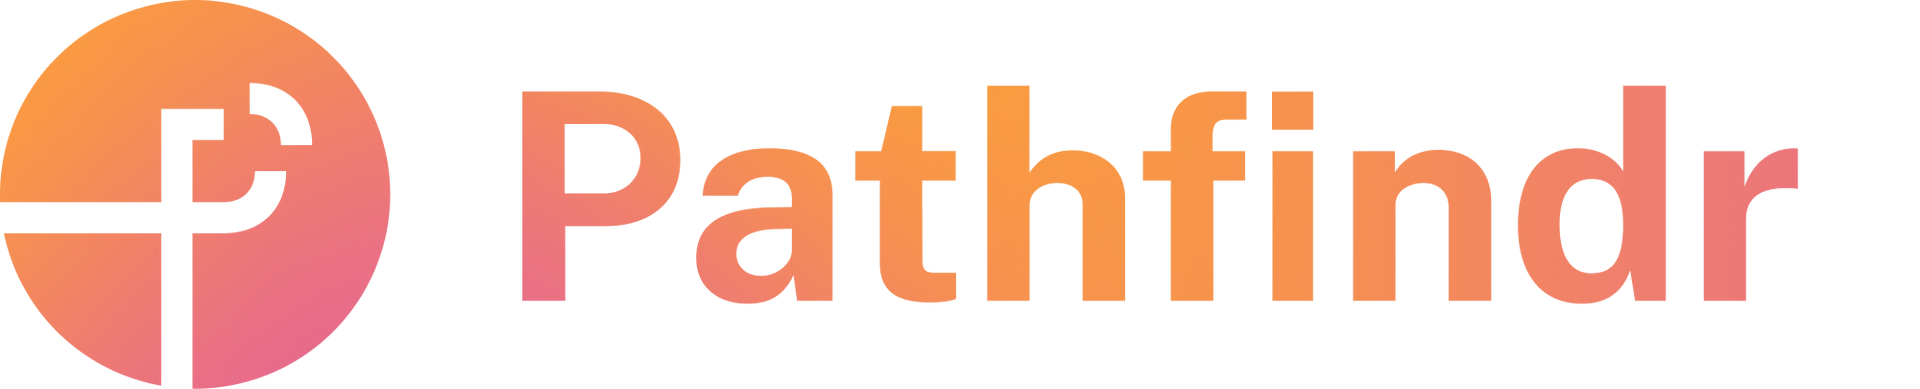 Pathfindr logo